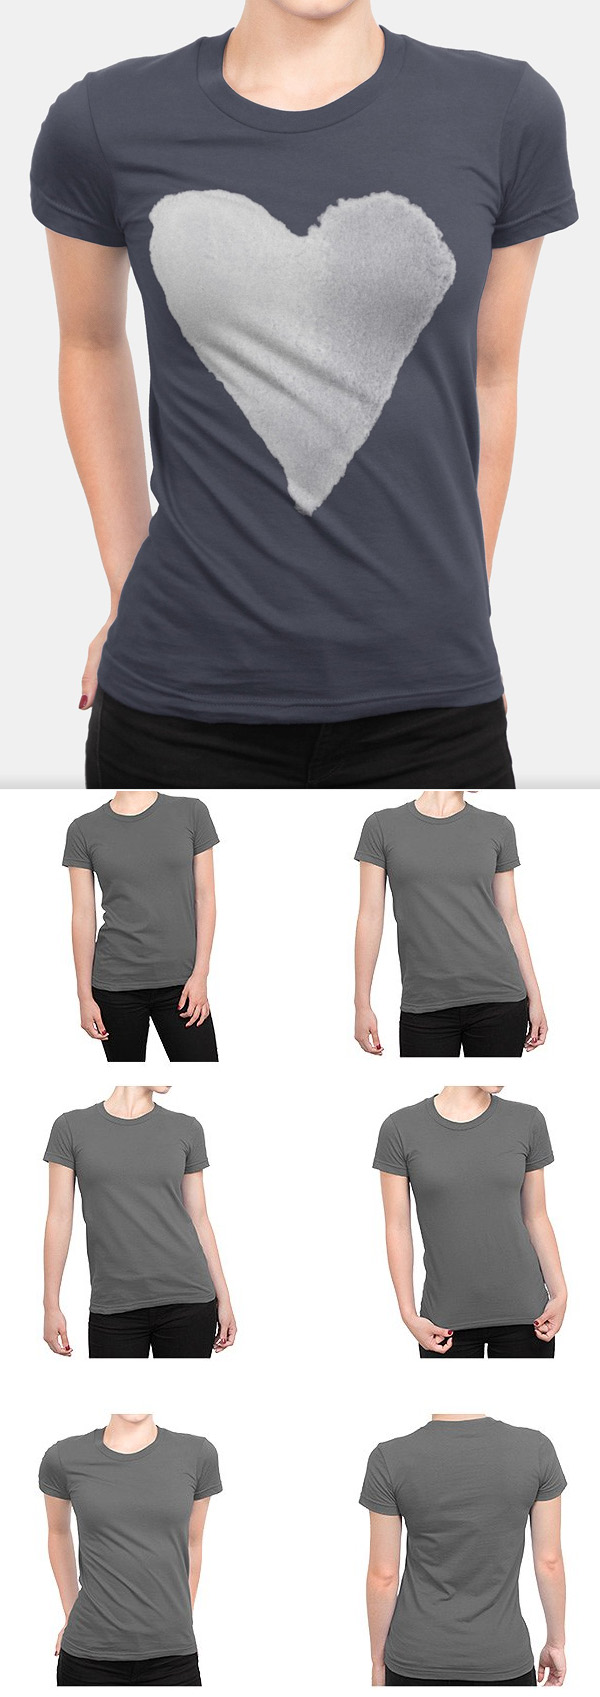 Women’s T-Shirt Apparel Mockups